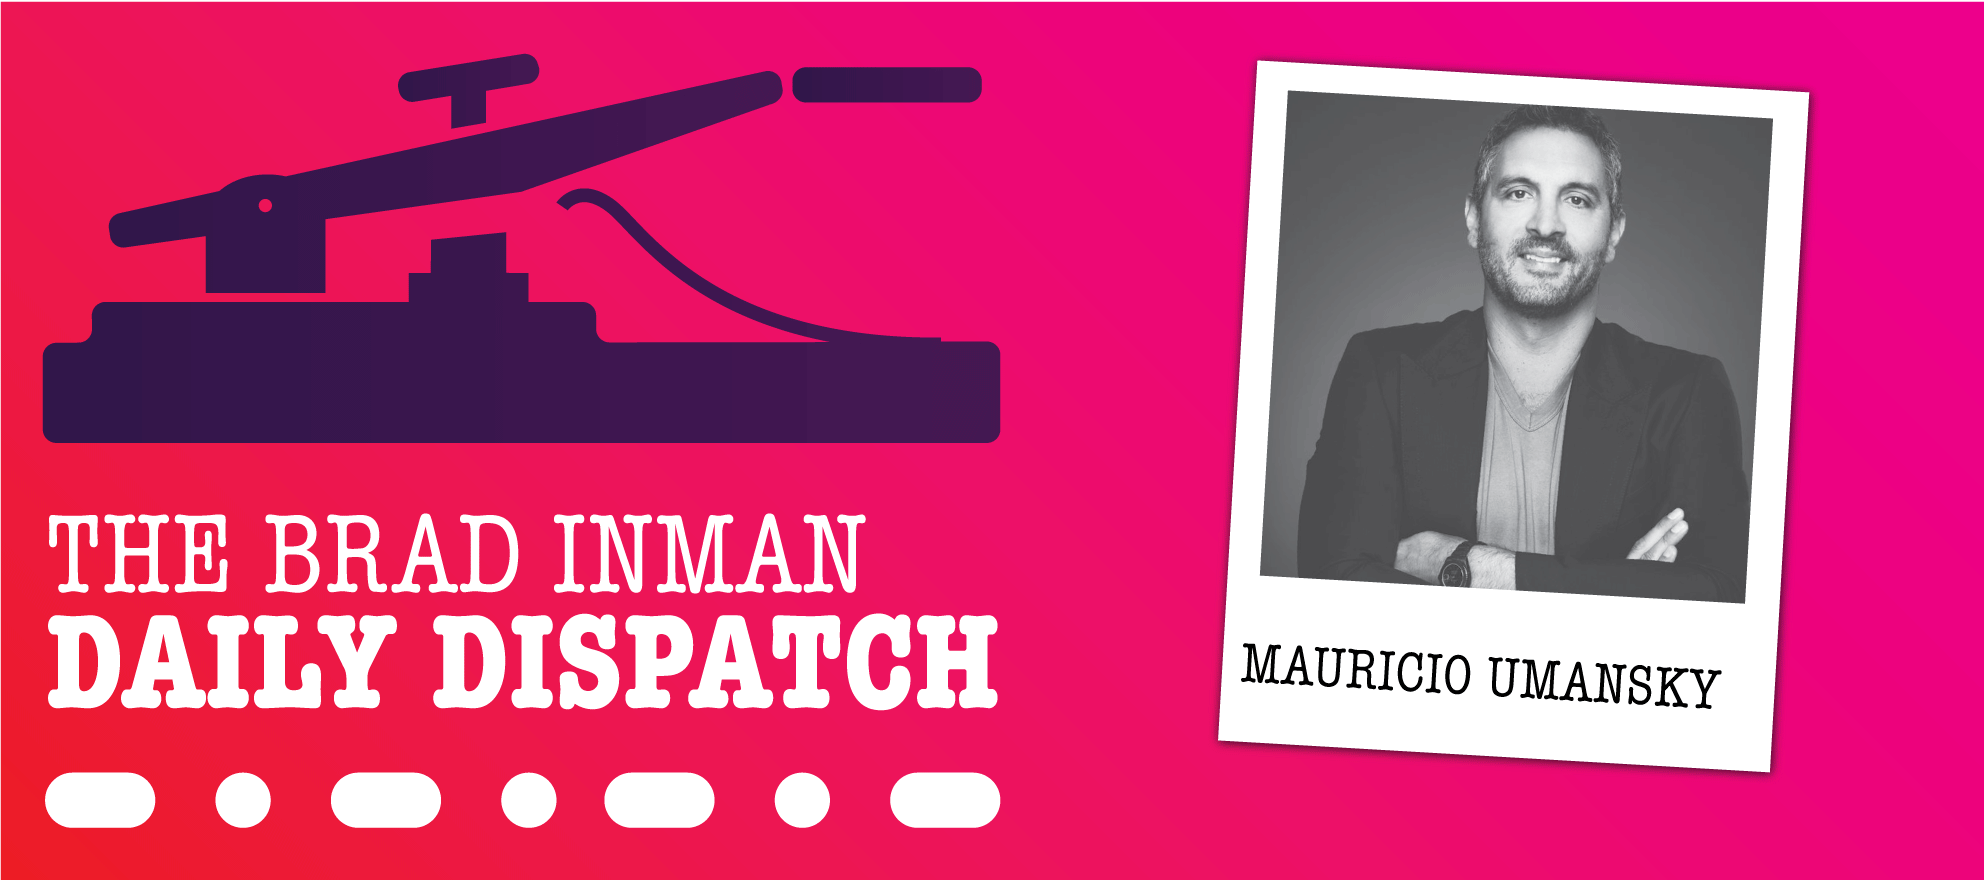 daily dispatch graphic with image inlay of mauricio umansky